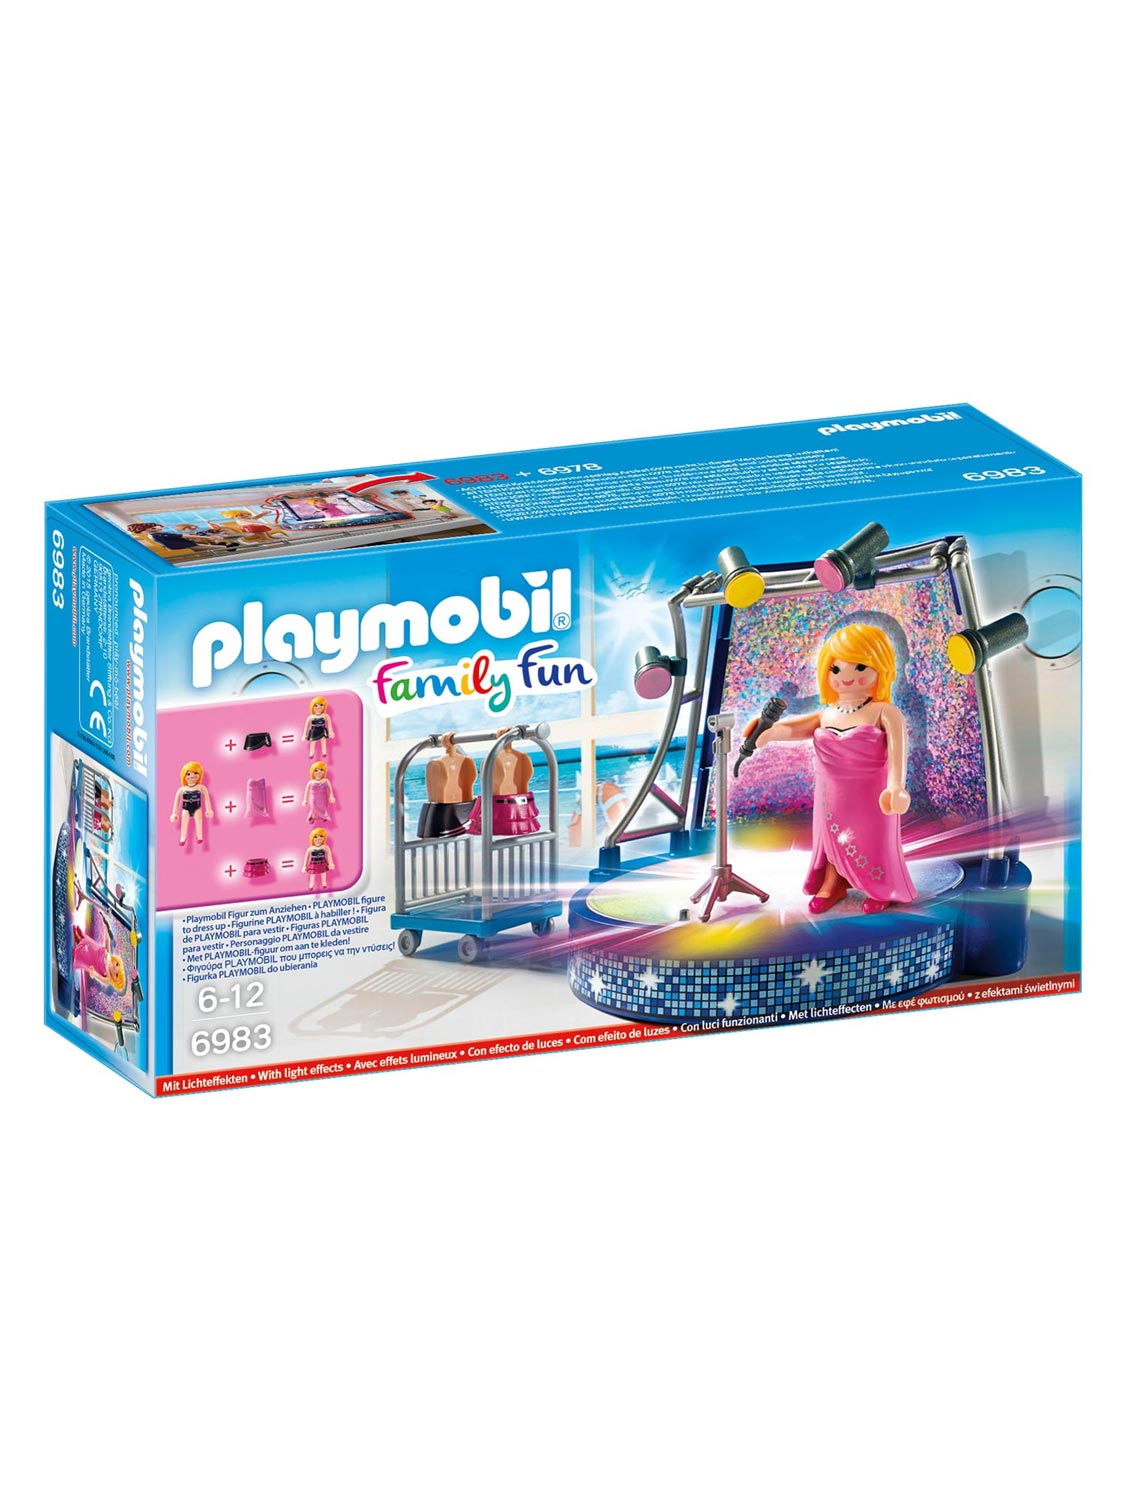 ToyLikeMe : Playmobil se met aux figurines handicapées